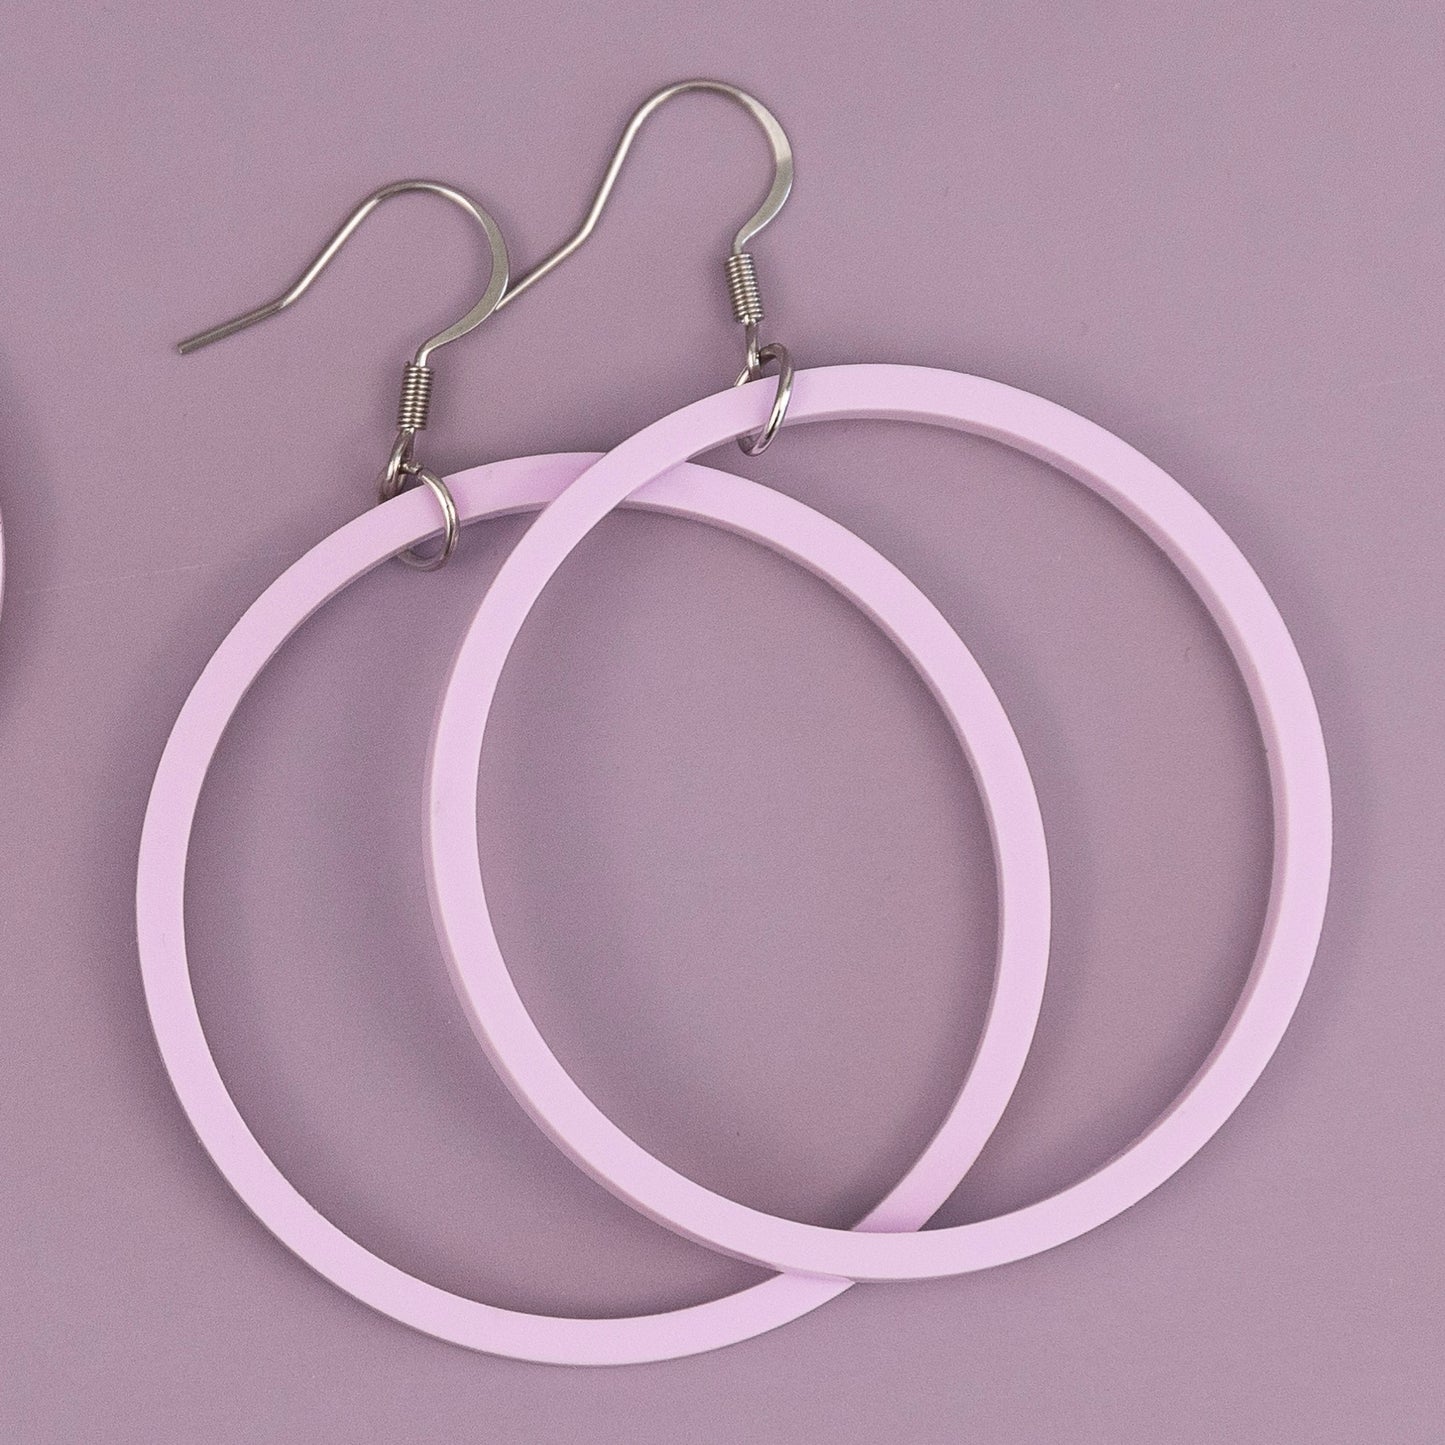 THE STAPLE HOOP in Lavender/ Lightweight Acrylic Statement Earrings